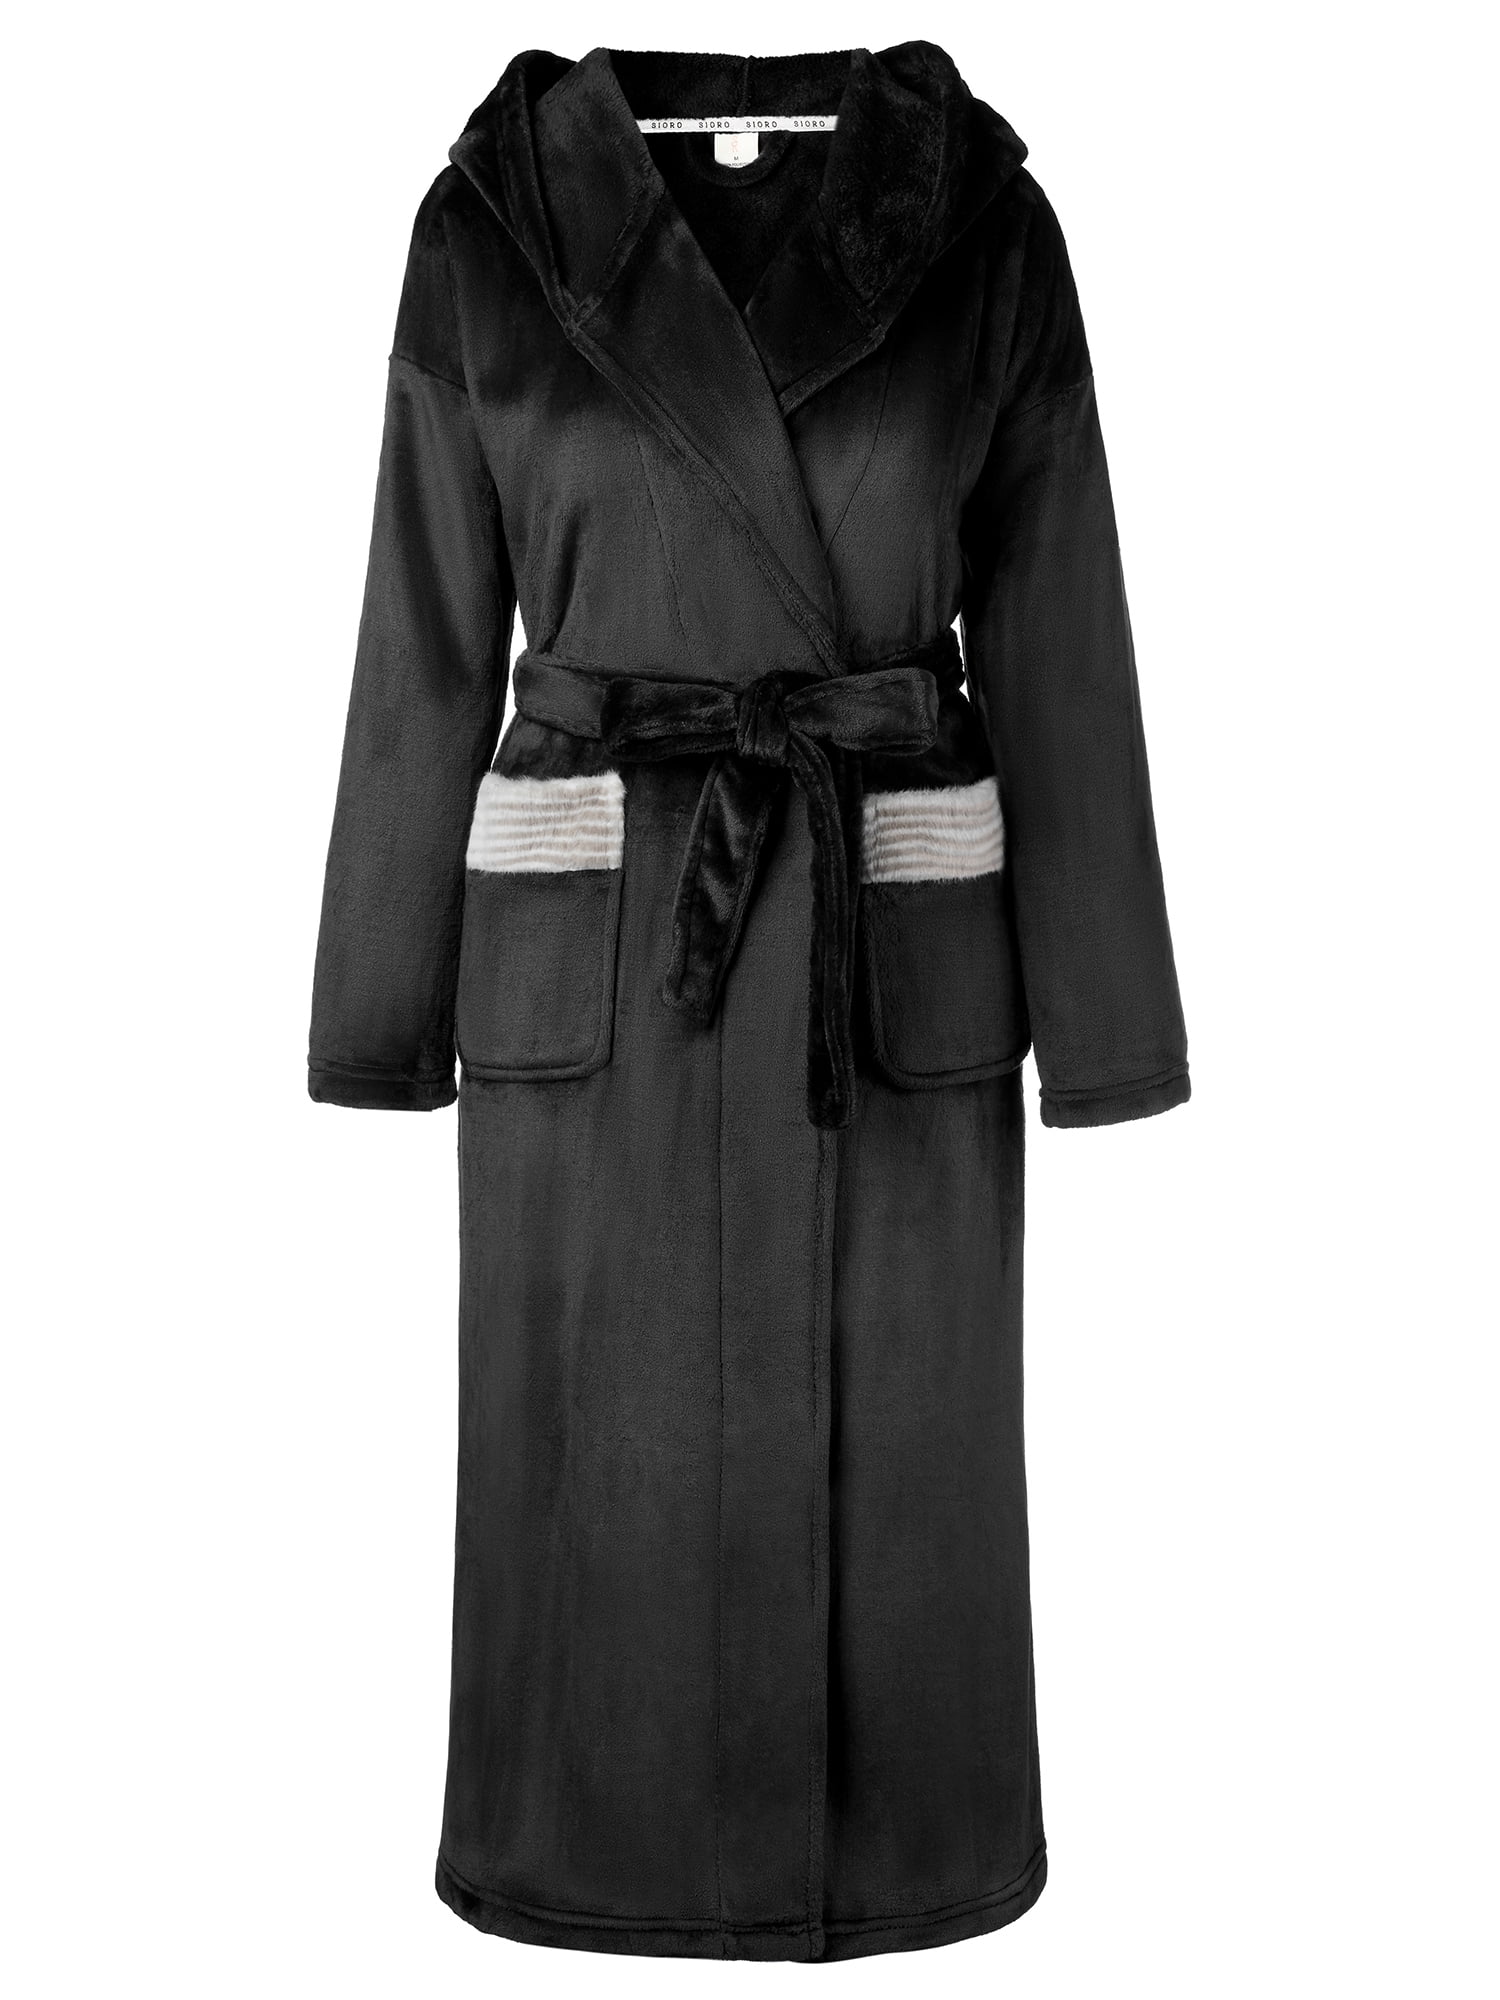 SIORO Women's flannel Fleece robe,Warm plush Long Bathrobe for Women shawl collar nightgown with Pockets,S-XL 